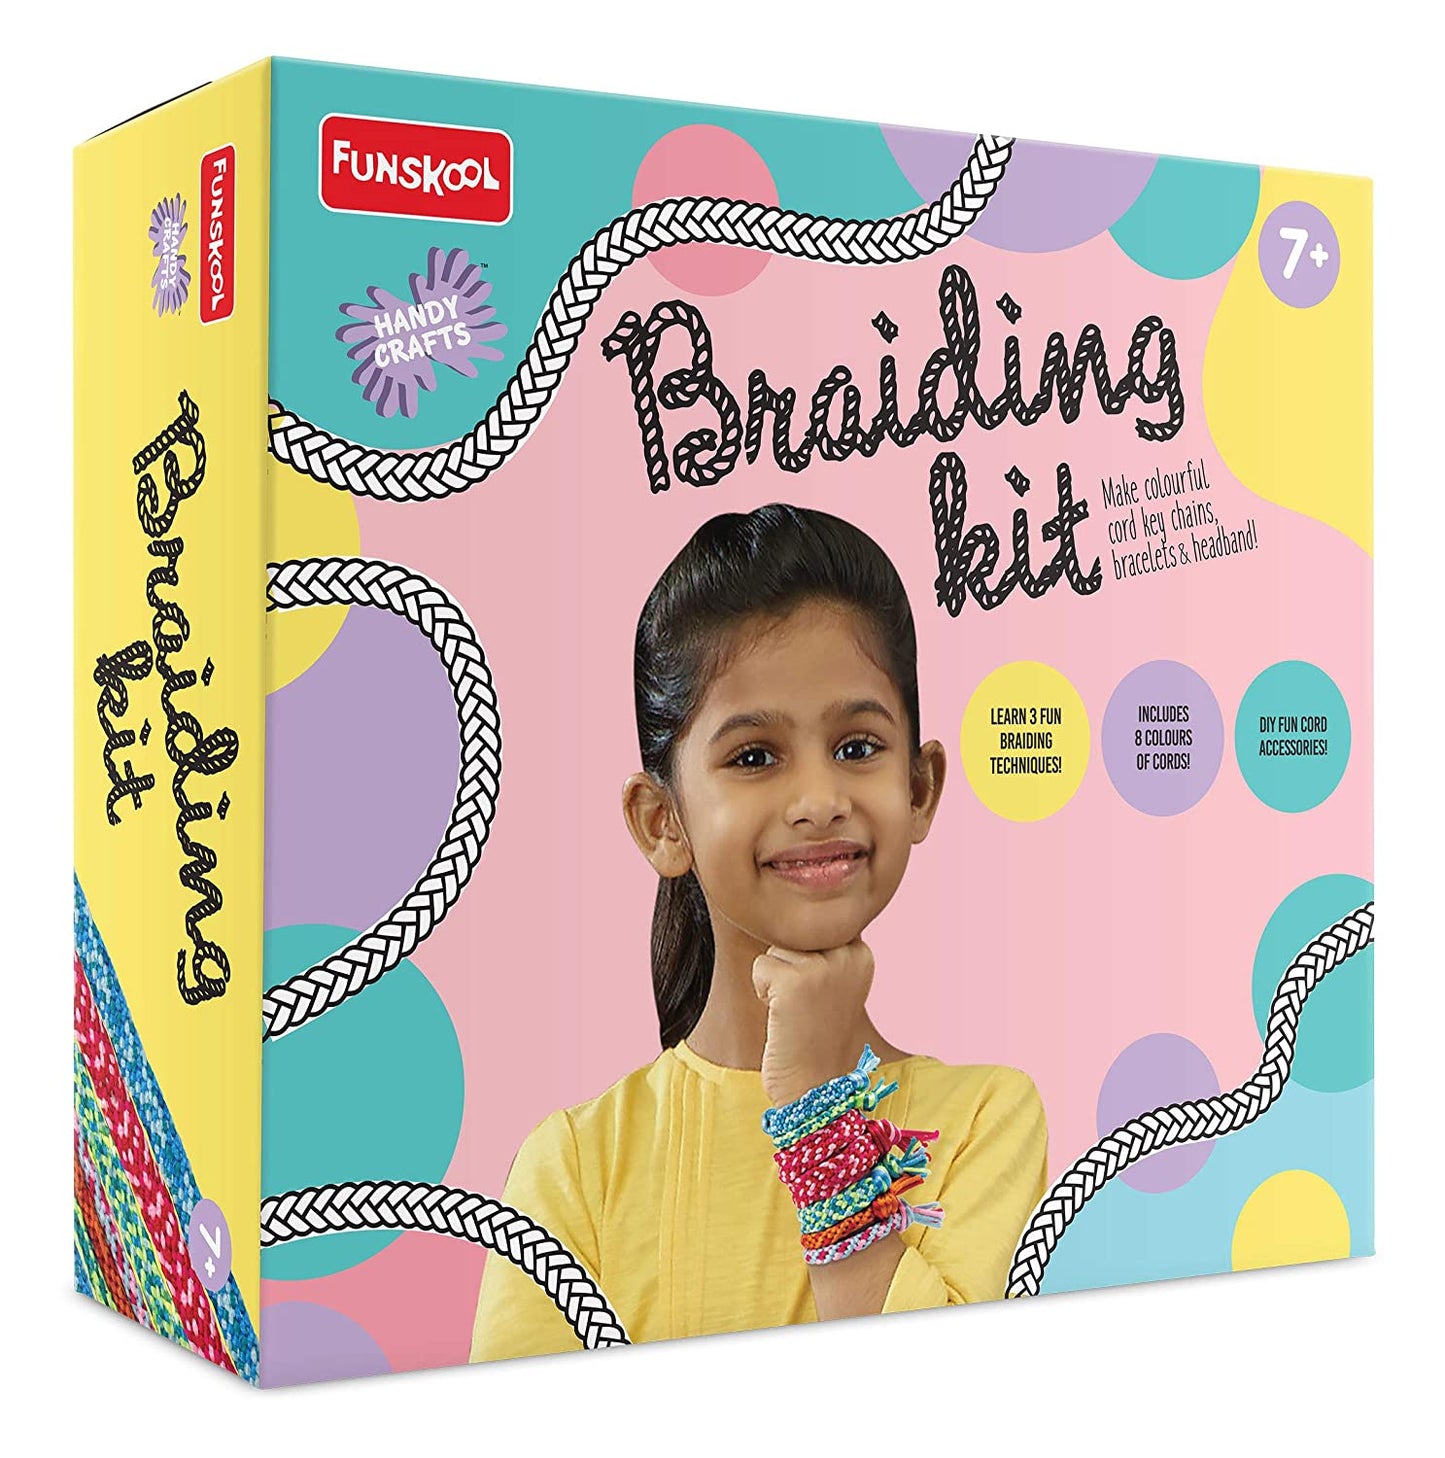 Funskool Handy Crafts Braiding Kit